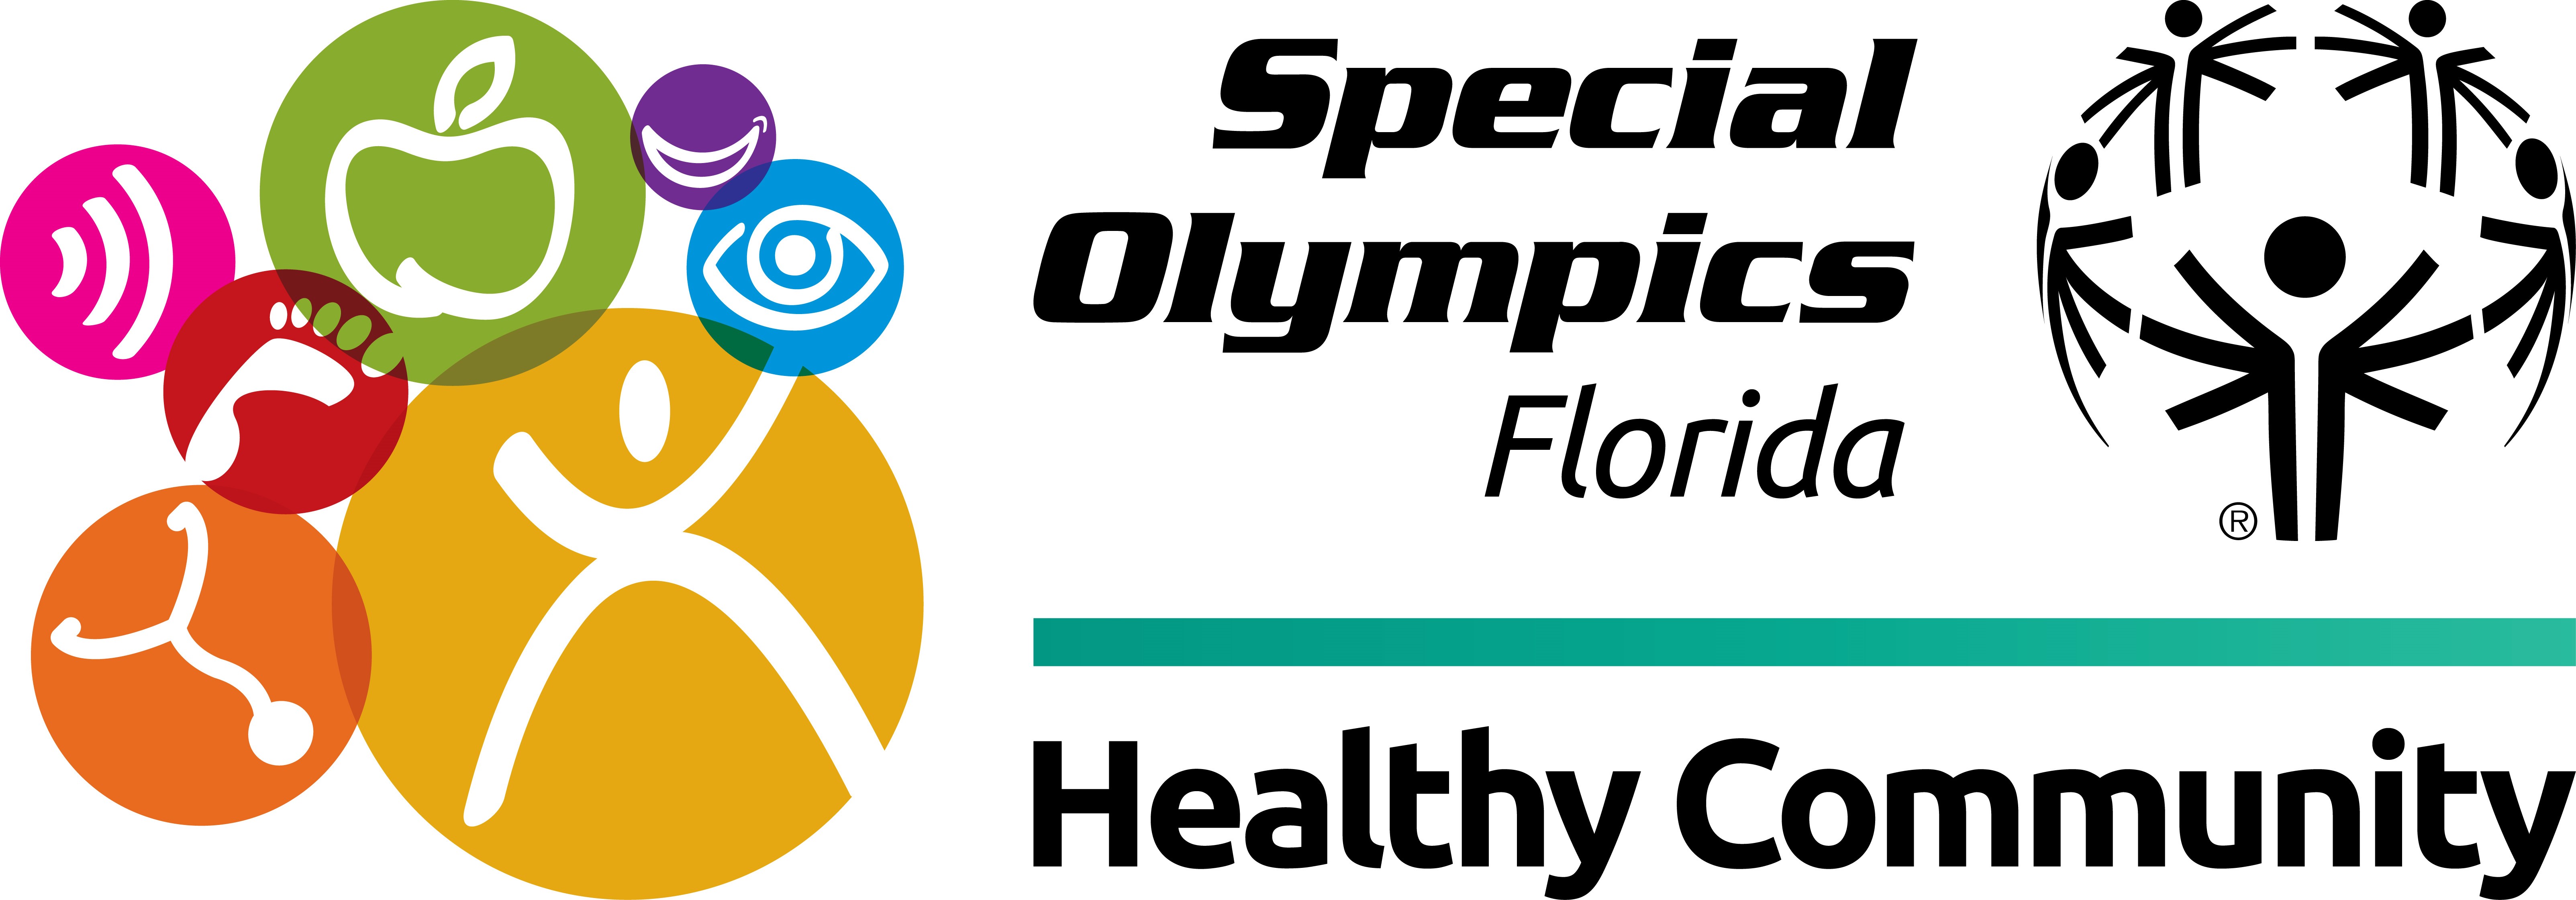 Special Olympics Florida Healthy Community Logo